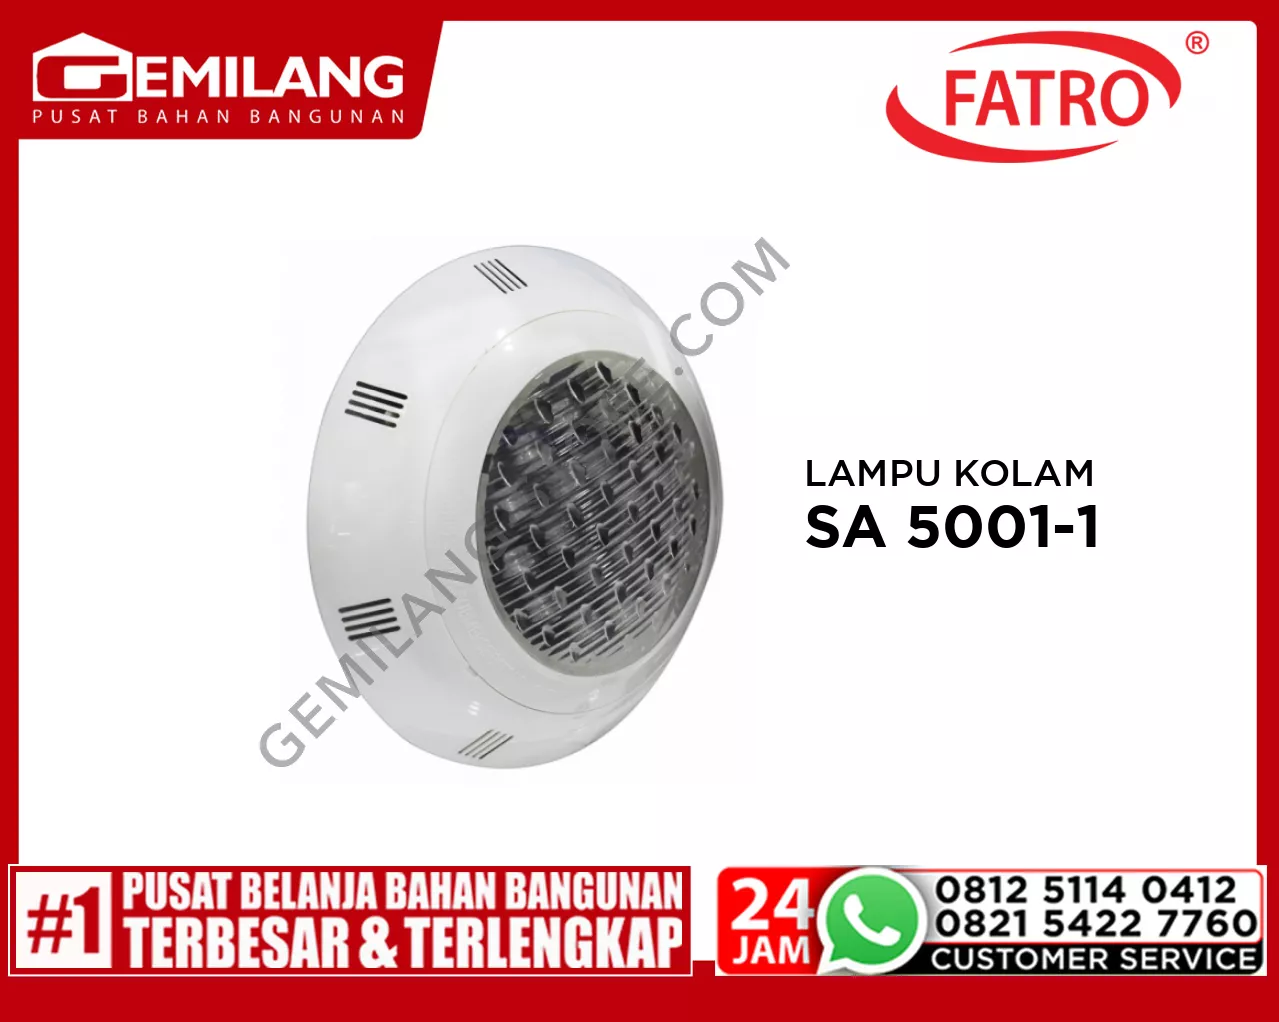 FATRO LAMPU KOLAM SA 5001-1 W.WH 18w/12v